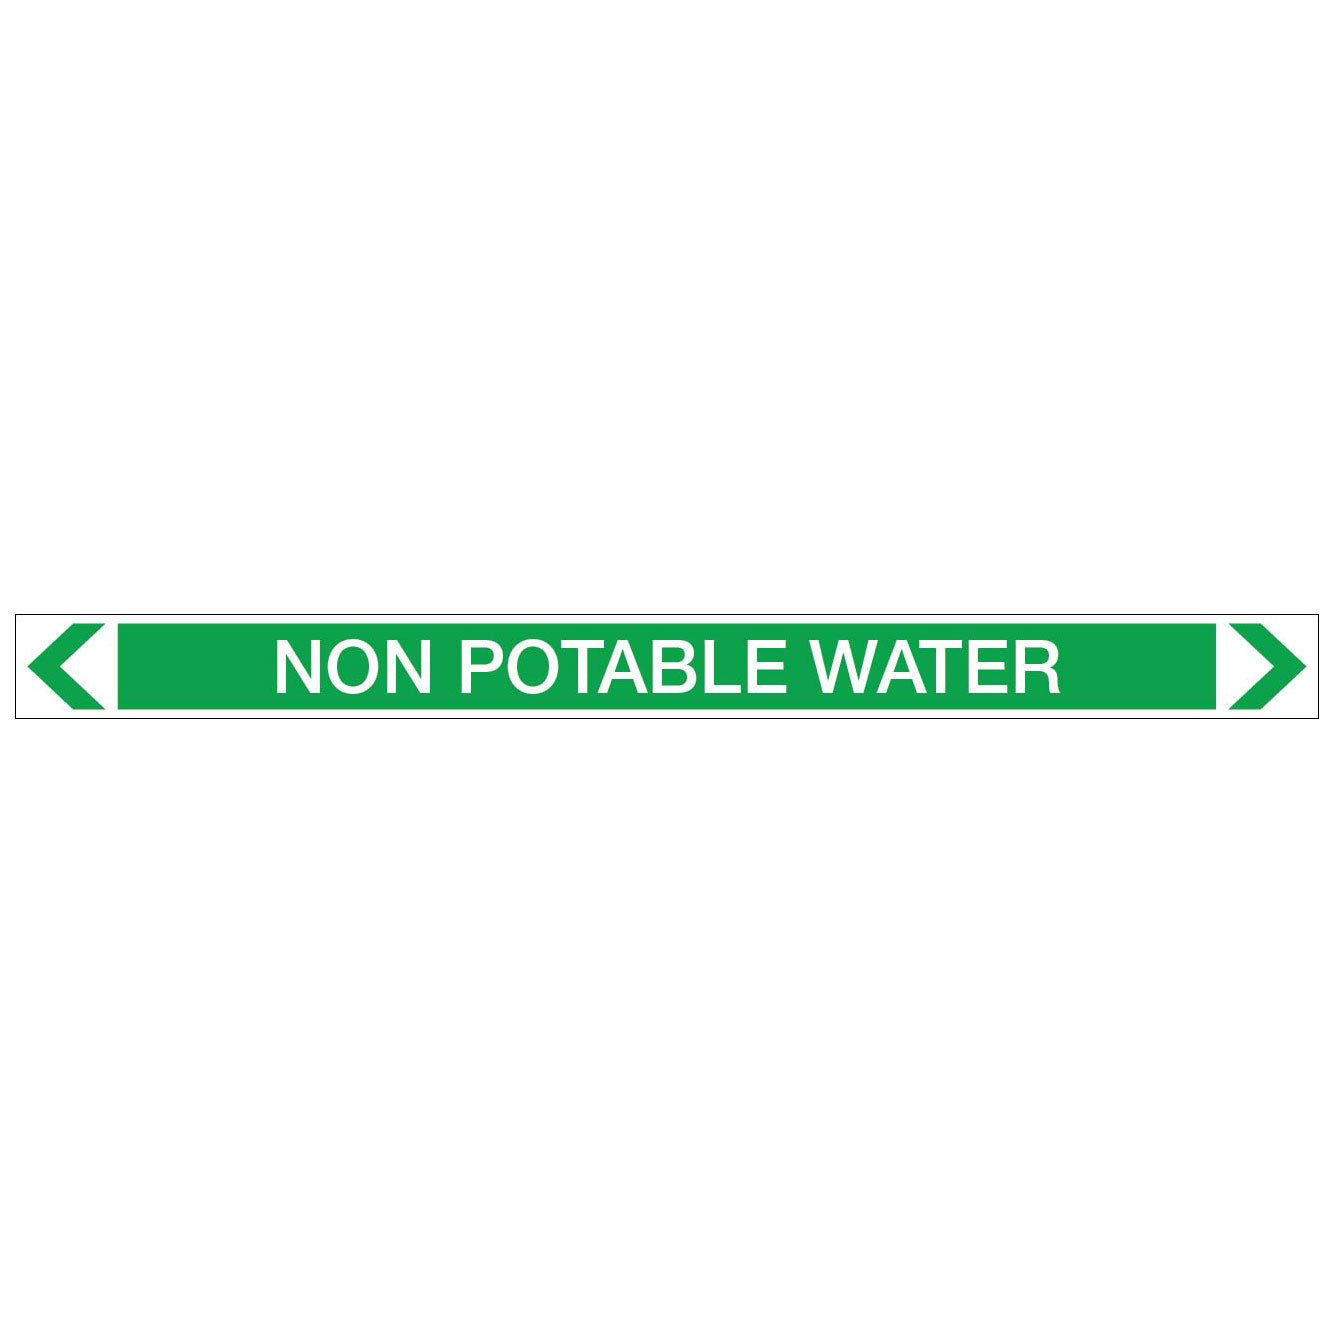 Water - Non Potable Water - Pipe Marker Sticker